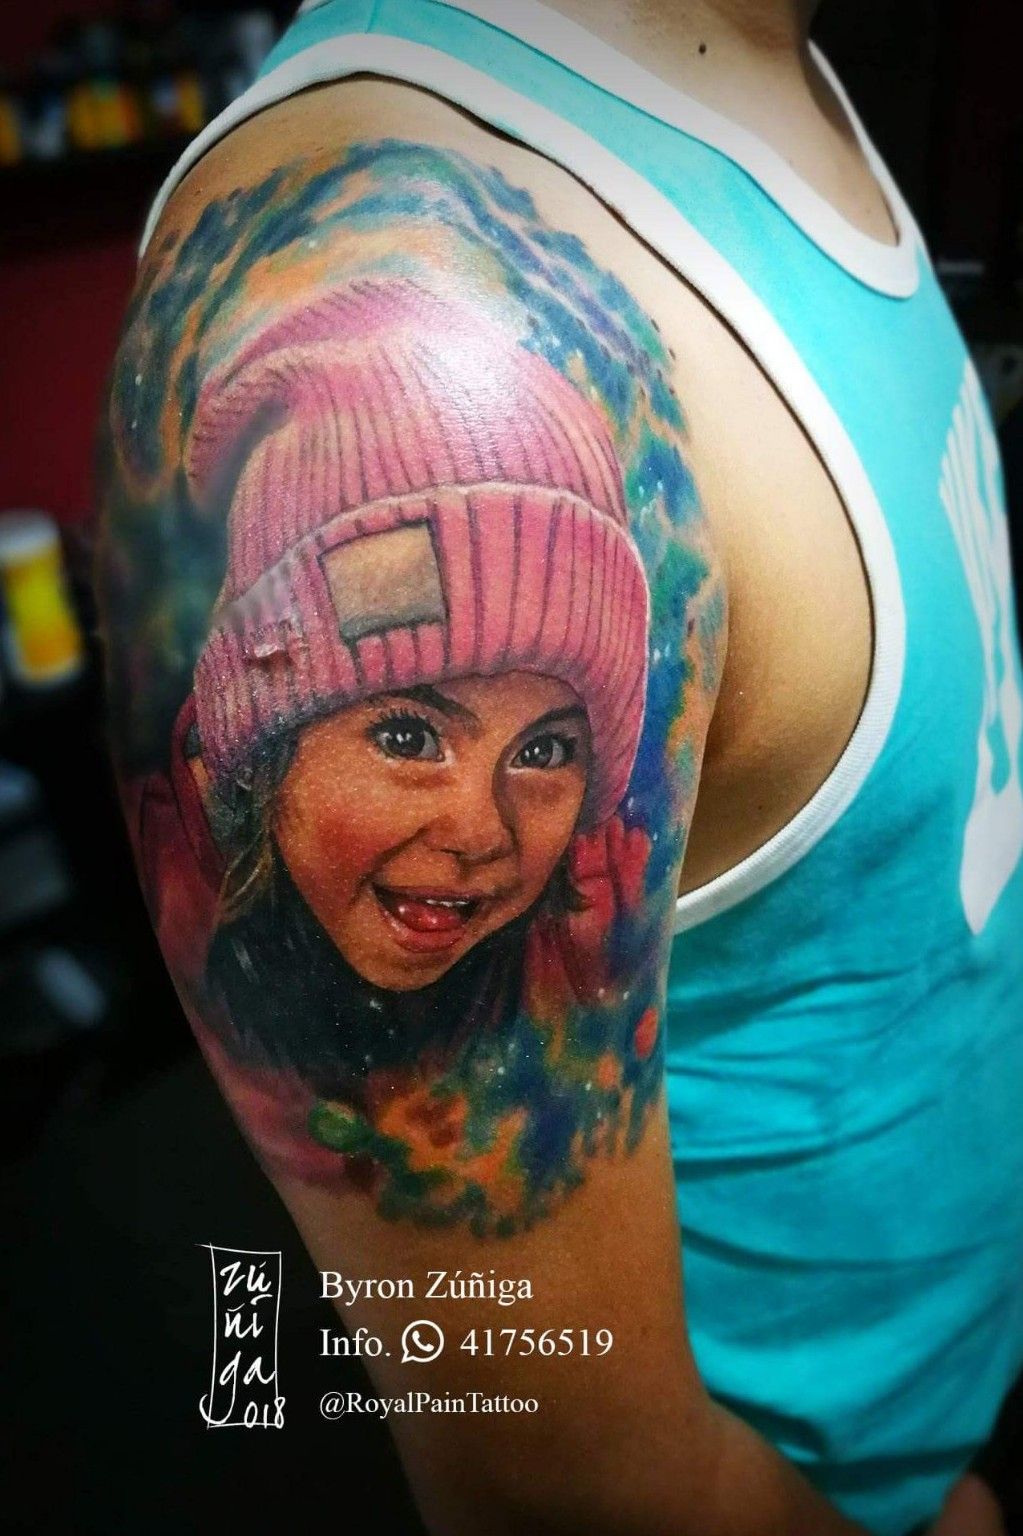 Tattoo uploaded by Byron Zuñiga • Portrait tattoo with cosmos background.  #byronzuñiga #royalpaintattoo #guatemala #realismtattoo #portraittattoo  #fullcolortattoo • Tattoodo